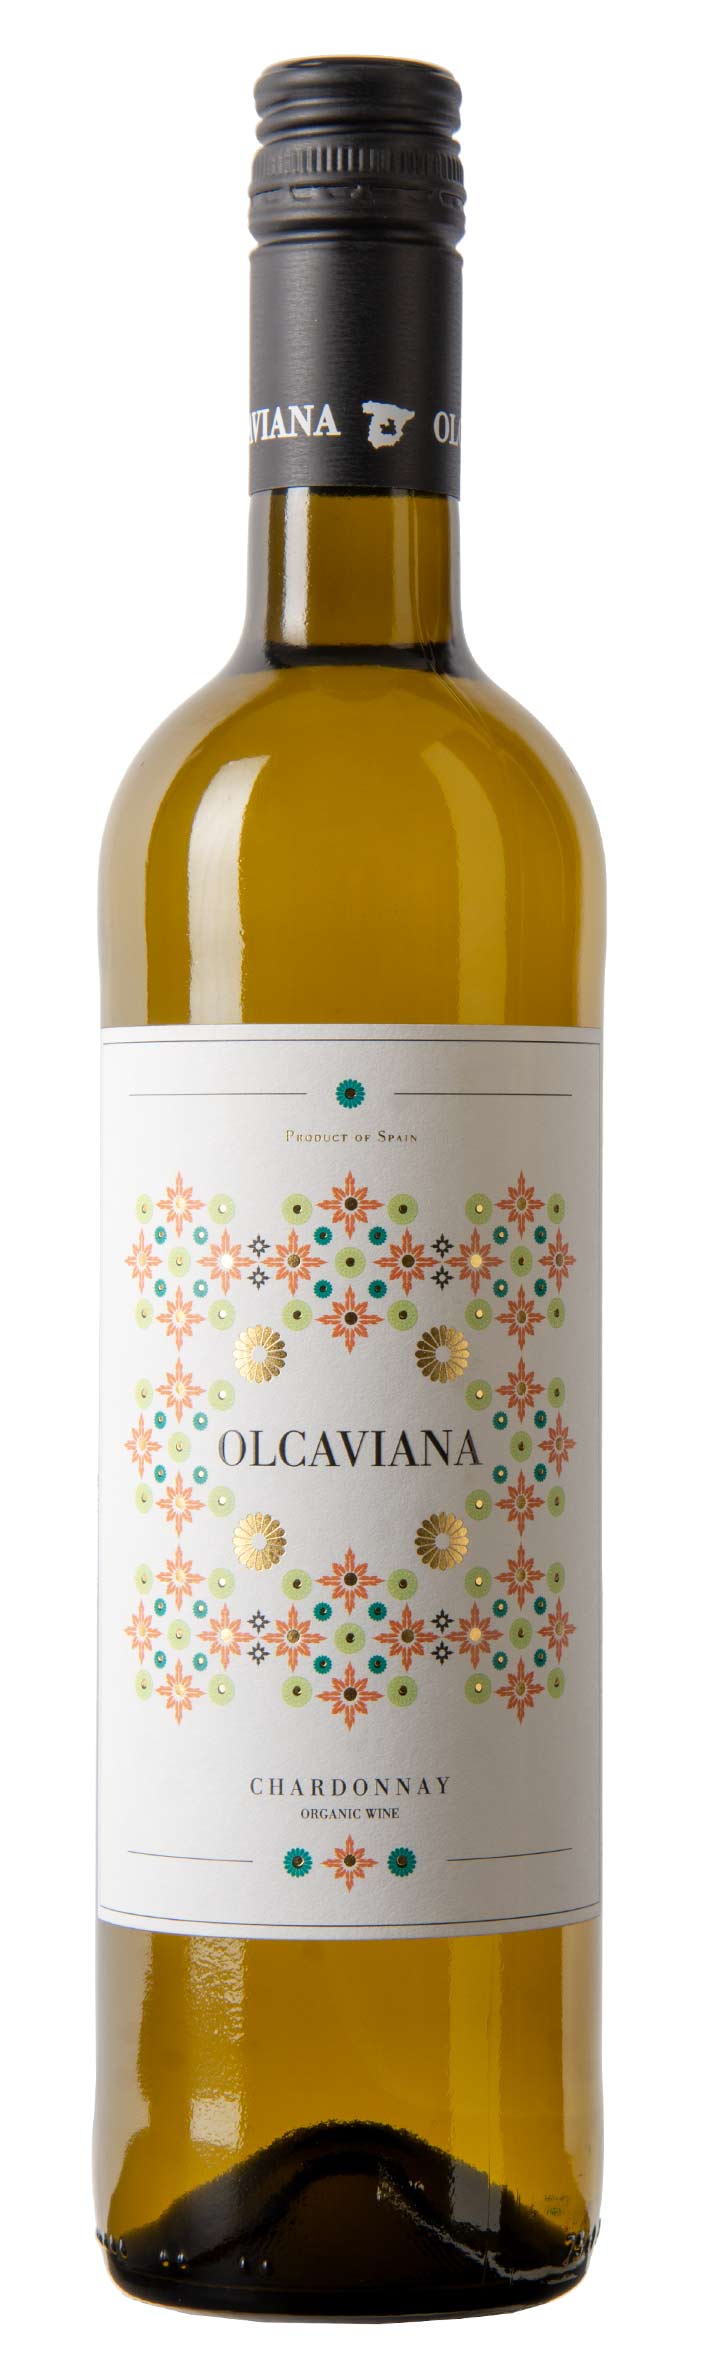 Bodegas Sierra Norte Olcaviana Chardonnay